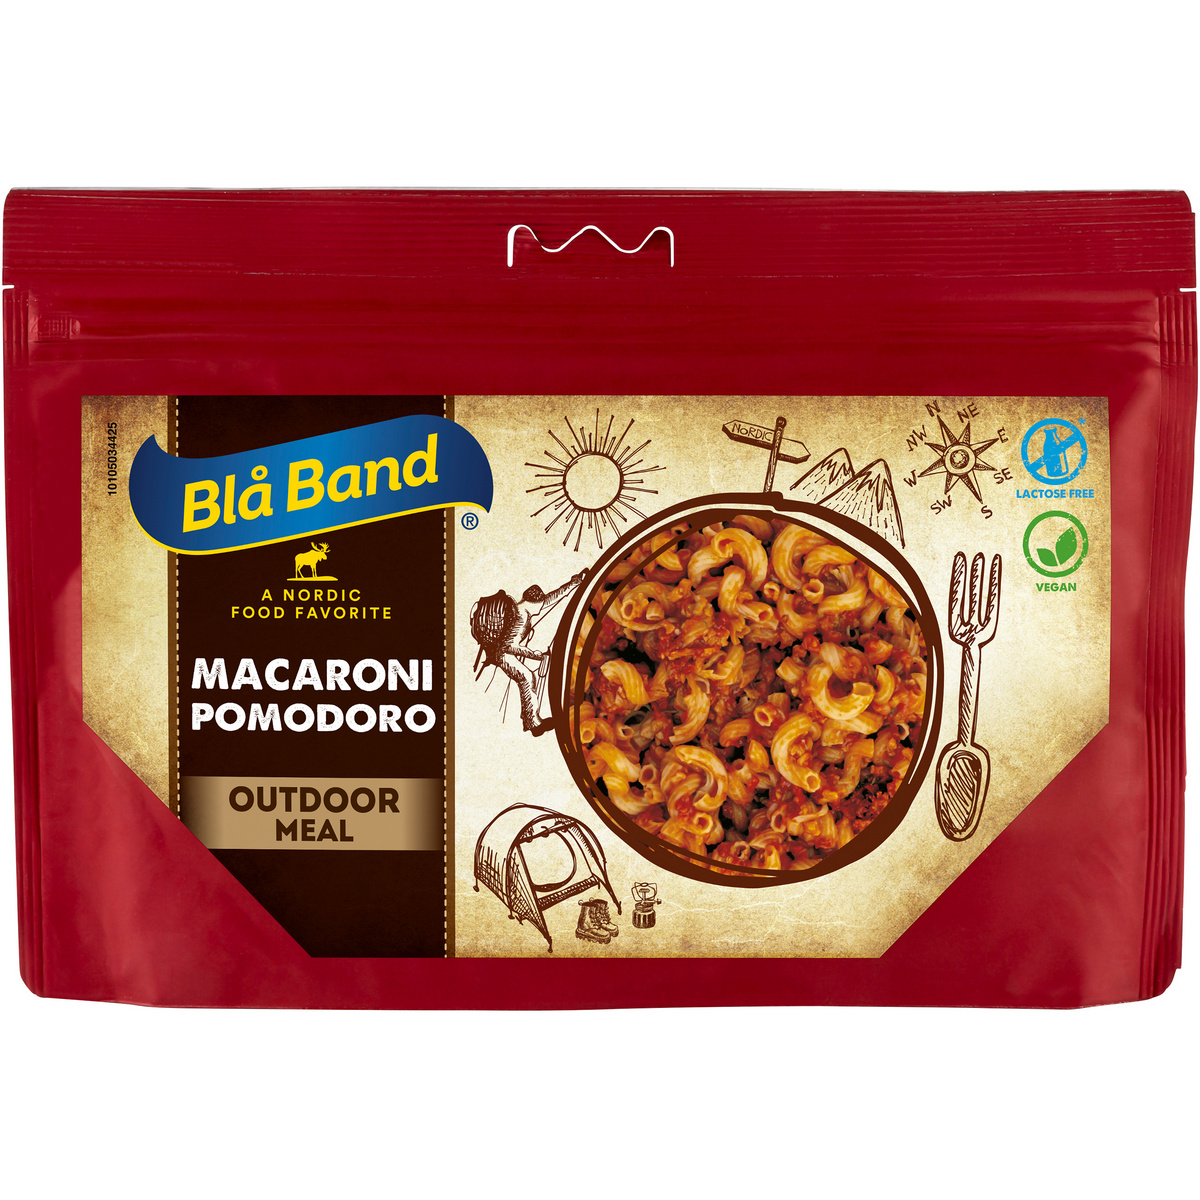 Image of Blå Band Maccheroni al pomodoro